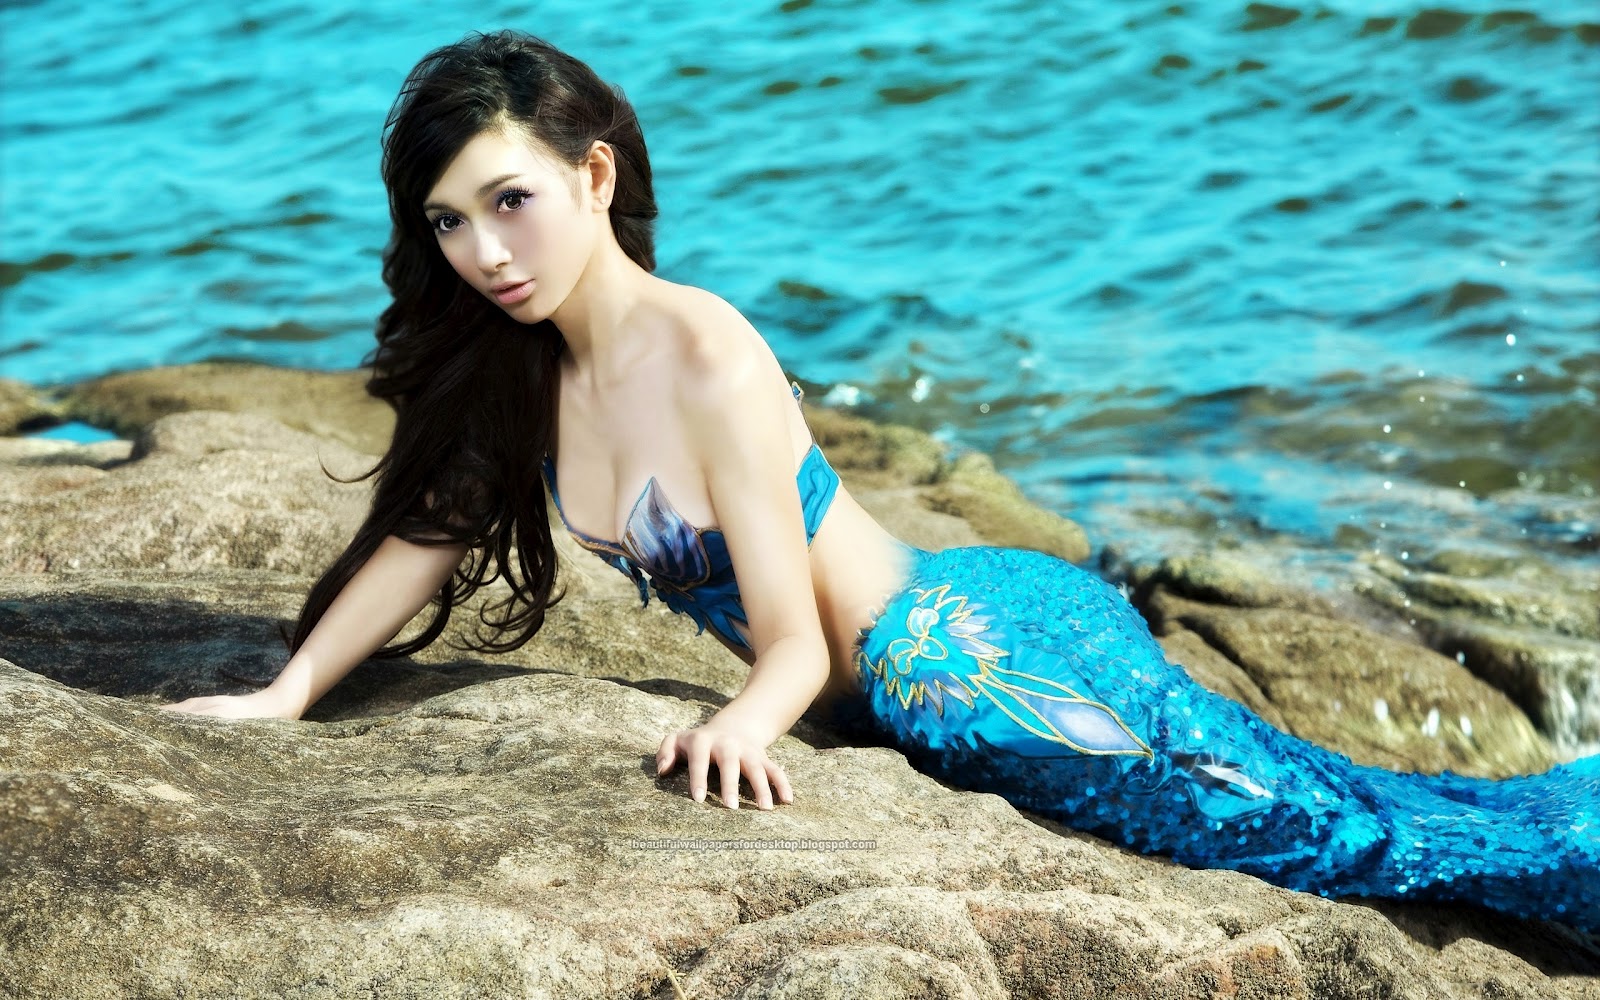 Beautiful Mermaids Wallpaper